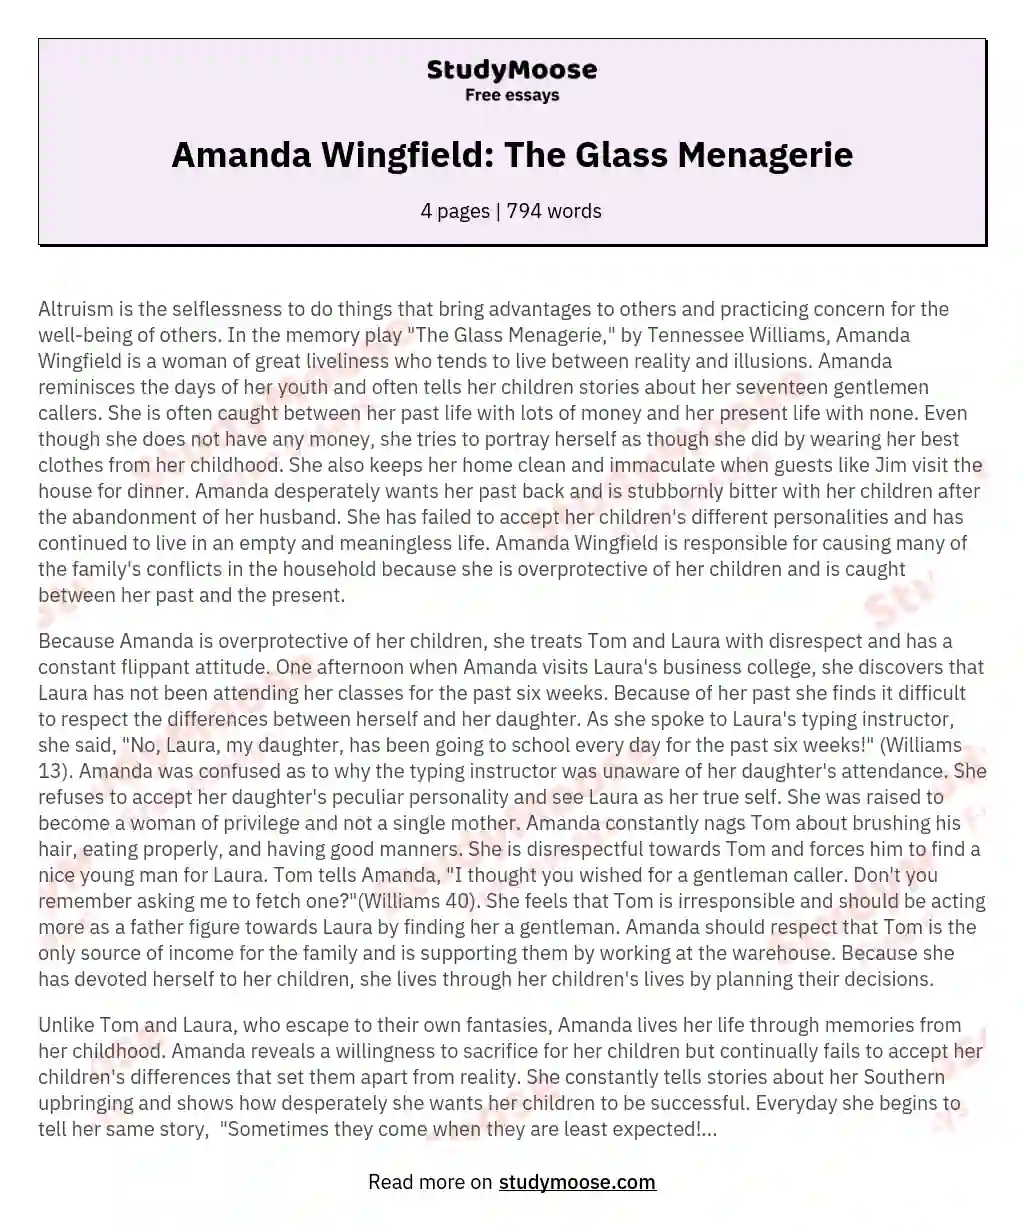 Amanda Wingfield: The Glass Menagerie